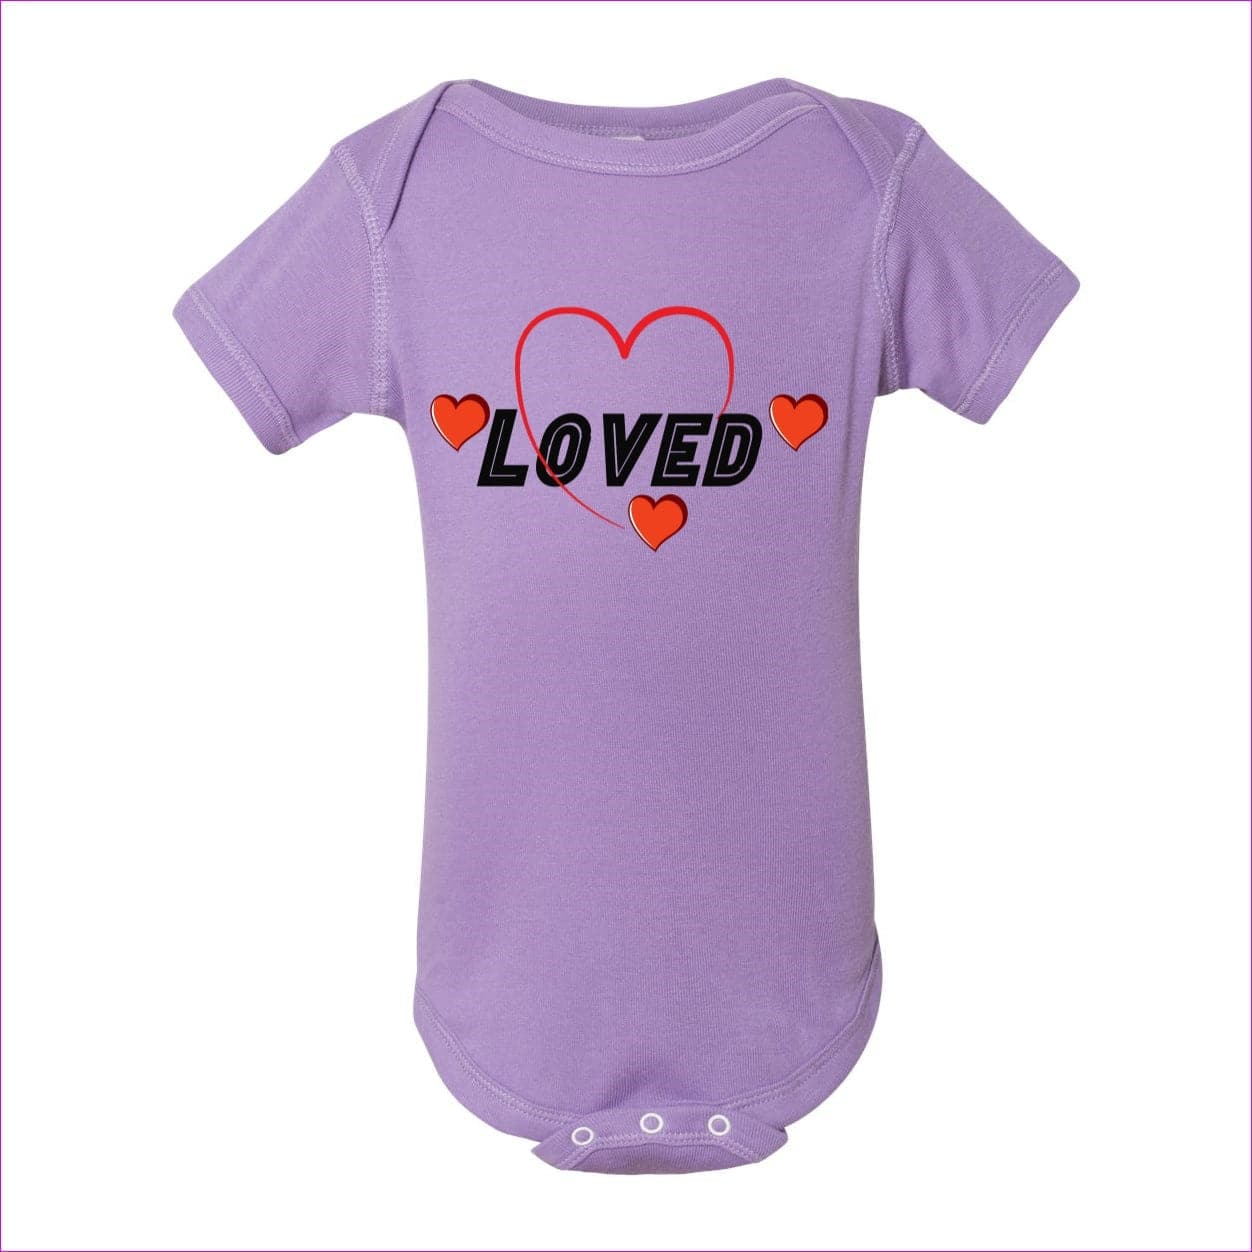 Lavender - Loved Infant Baby Rib Bodysuit - infant onesie at TFC&H Co.